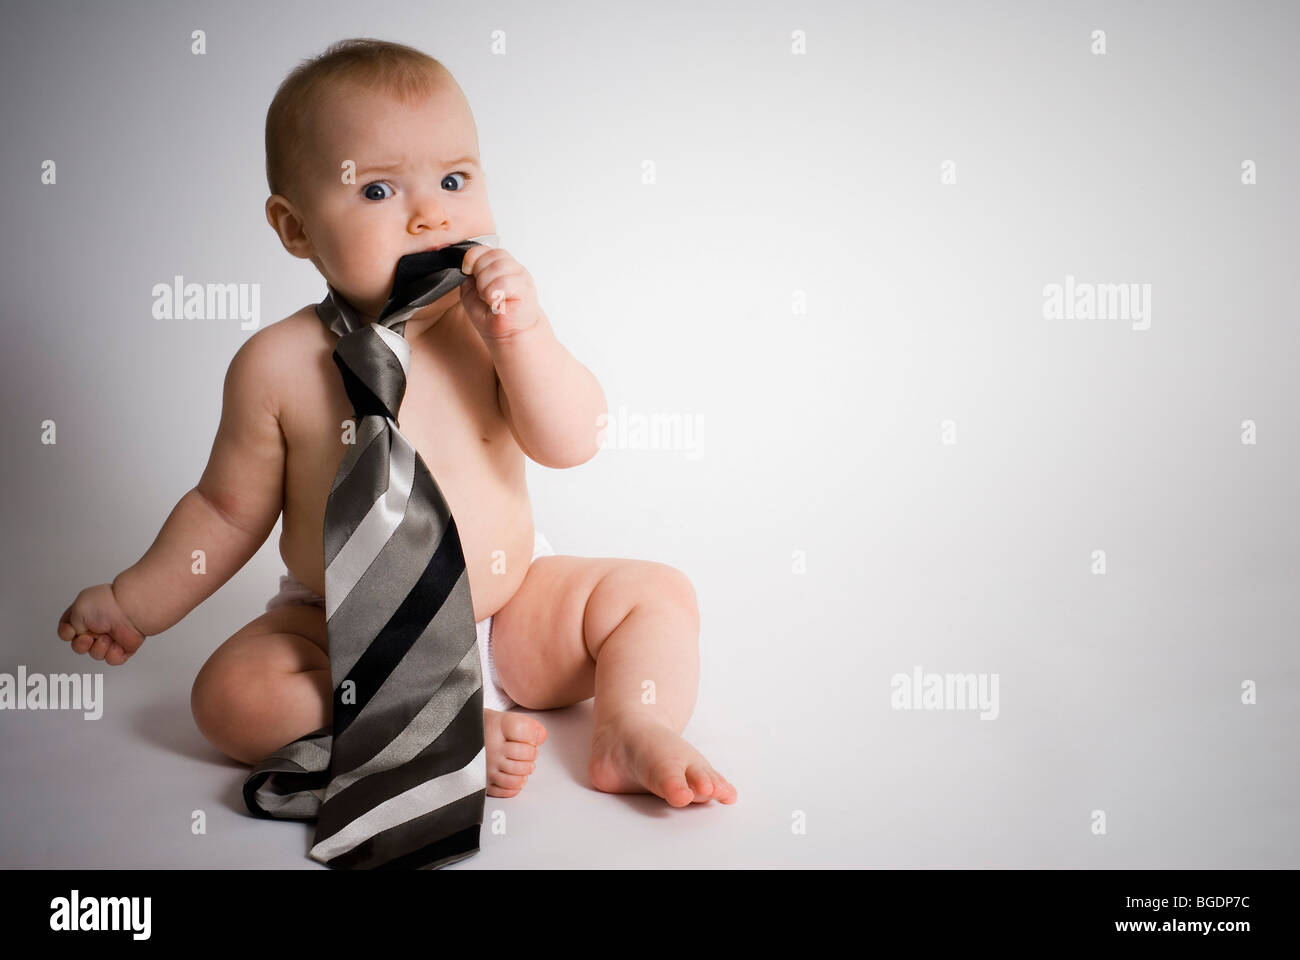 Baby wearing tie Stock Photo